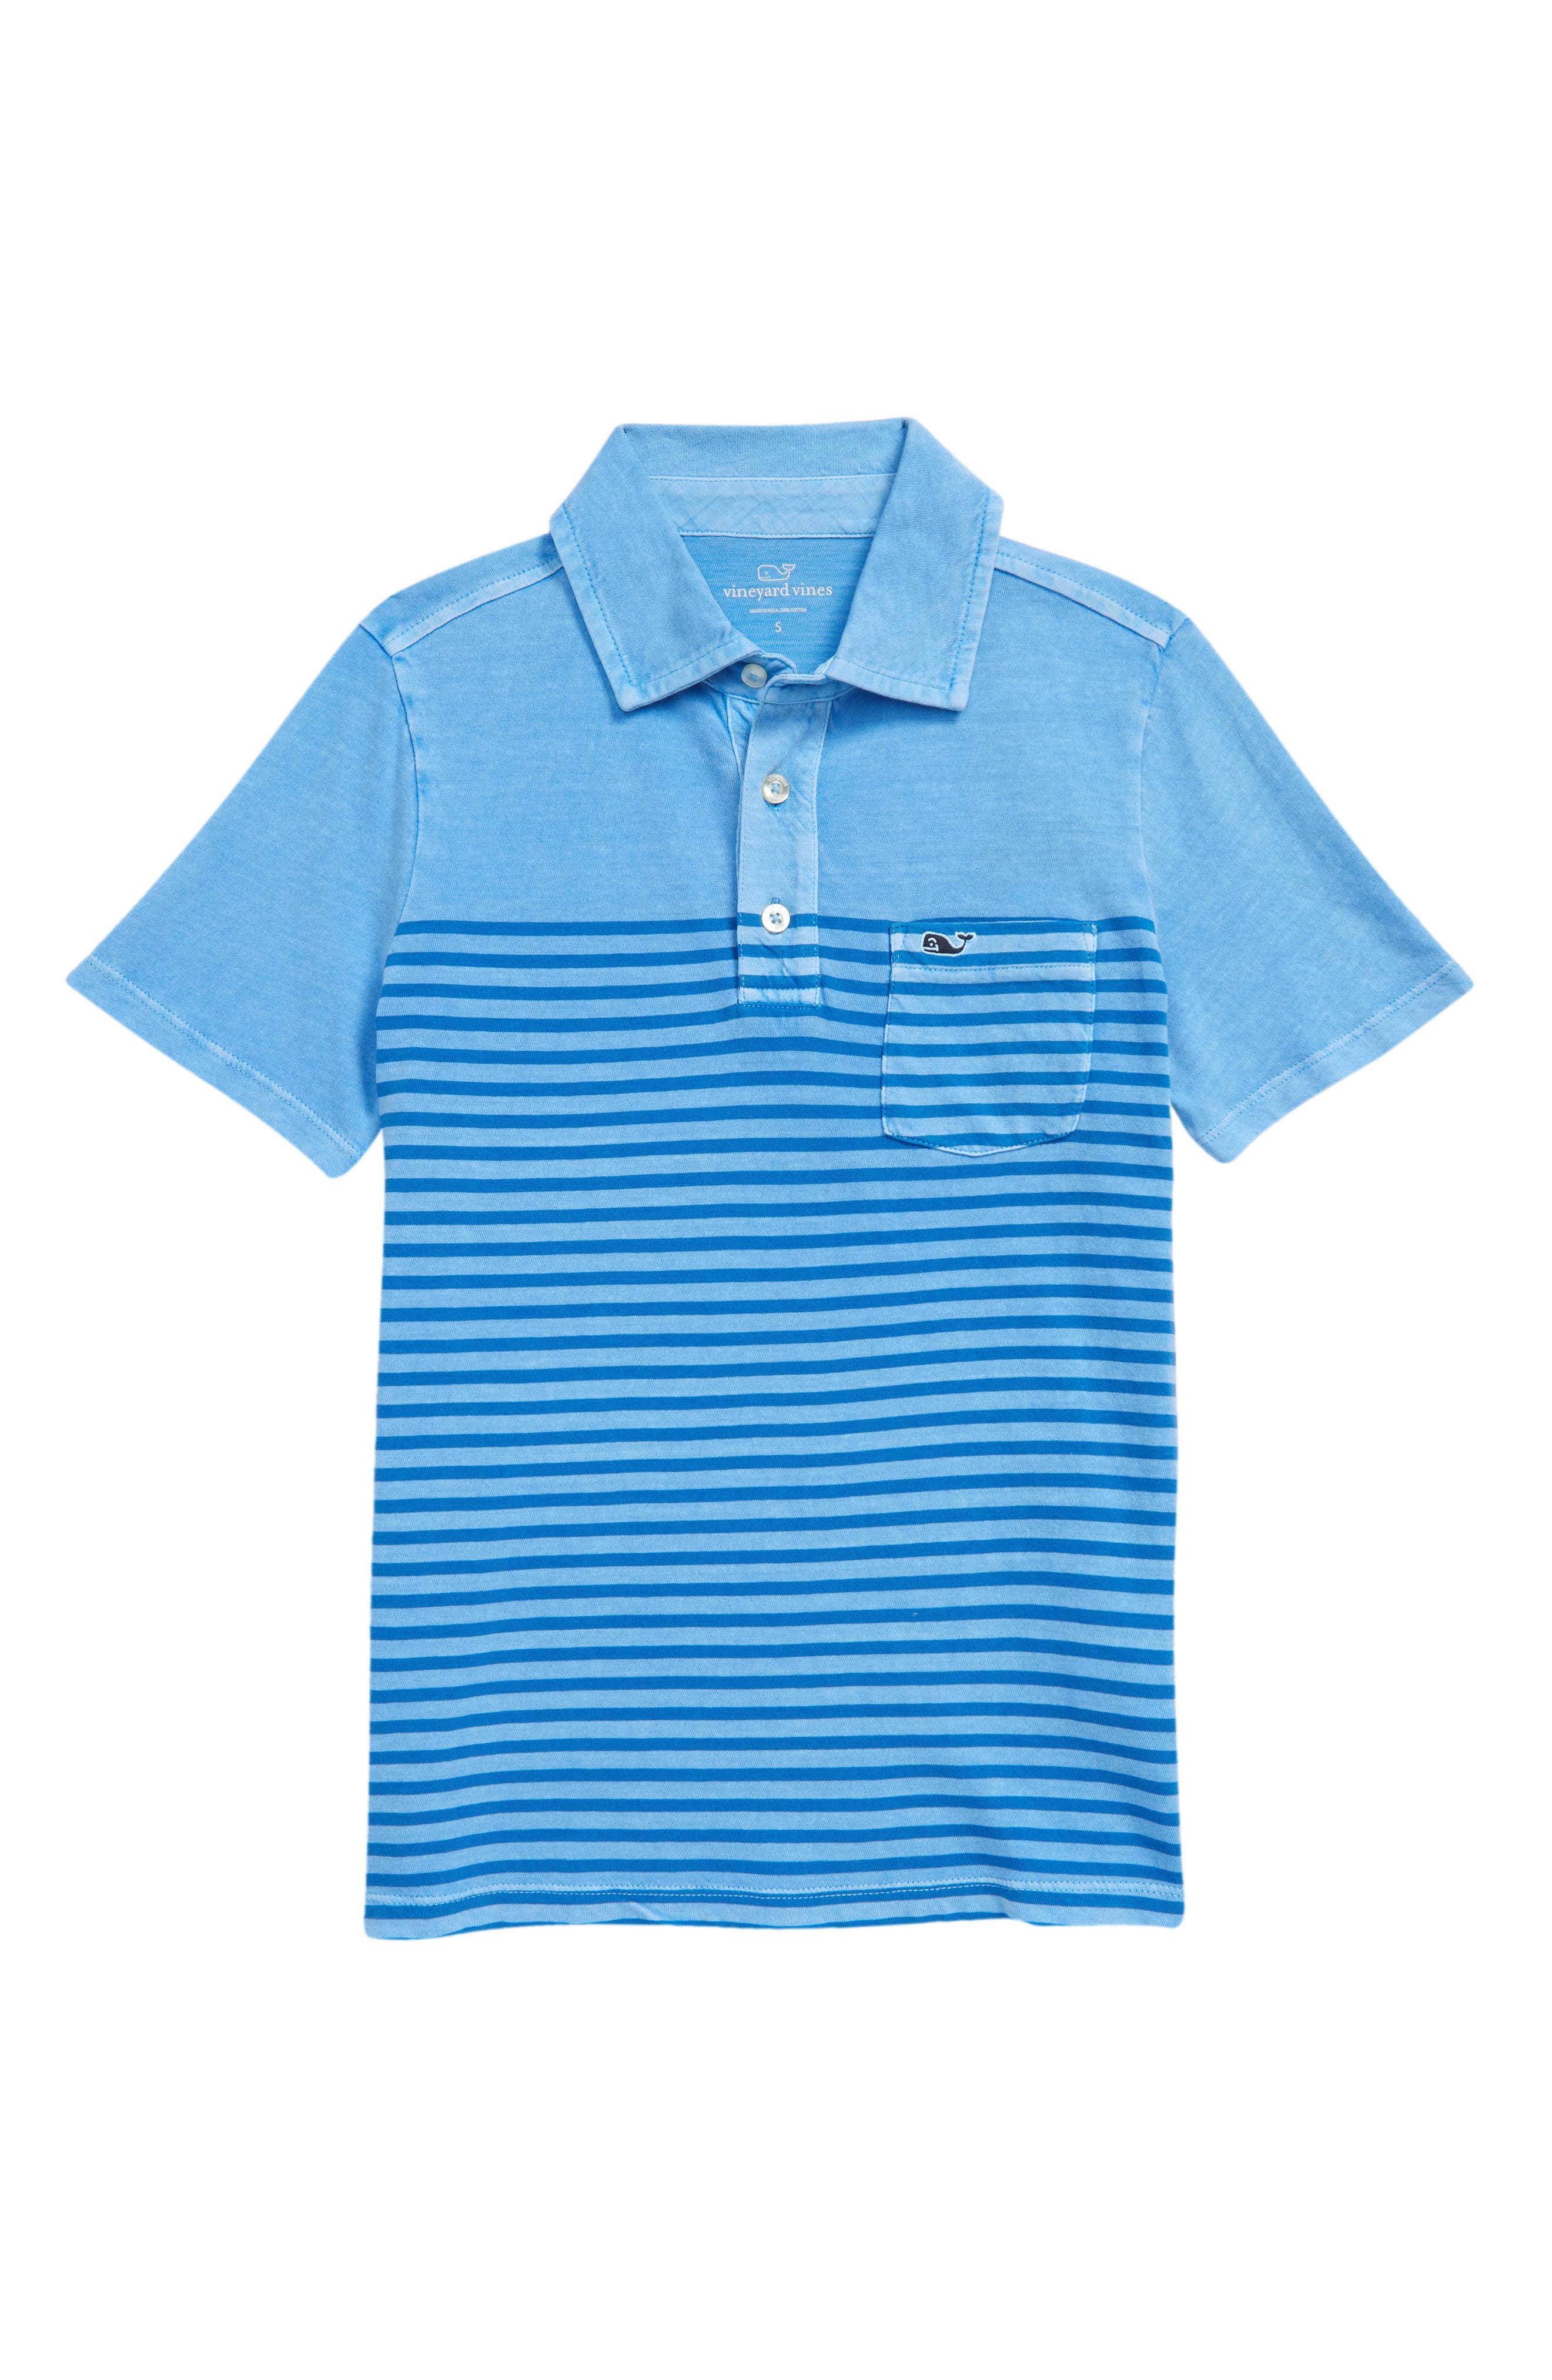 New Mini Boden Boys Stripe Pocket Polo Shirt 1 2 3 4 5 6 7 8 9 10 11 12 Yrs 